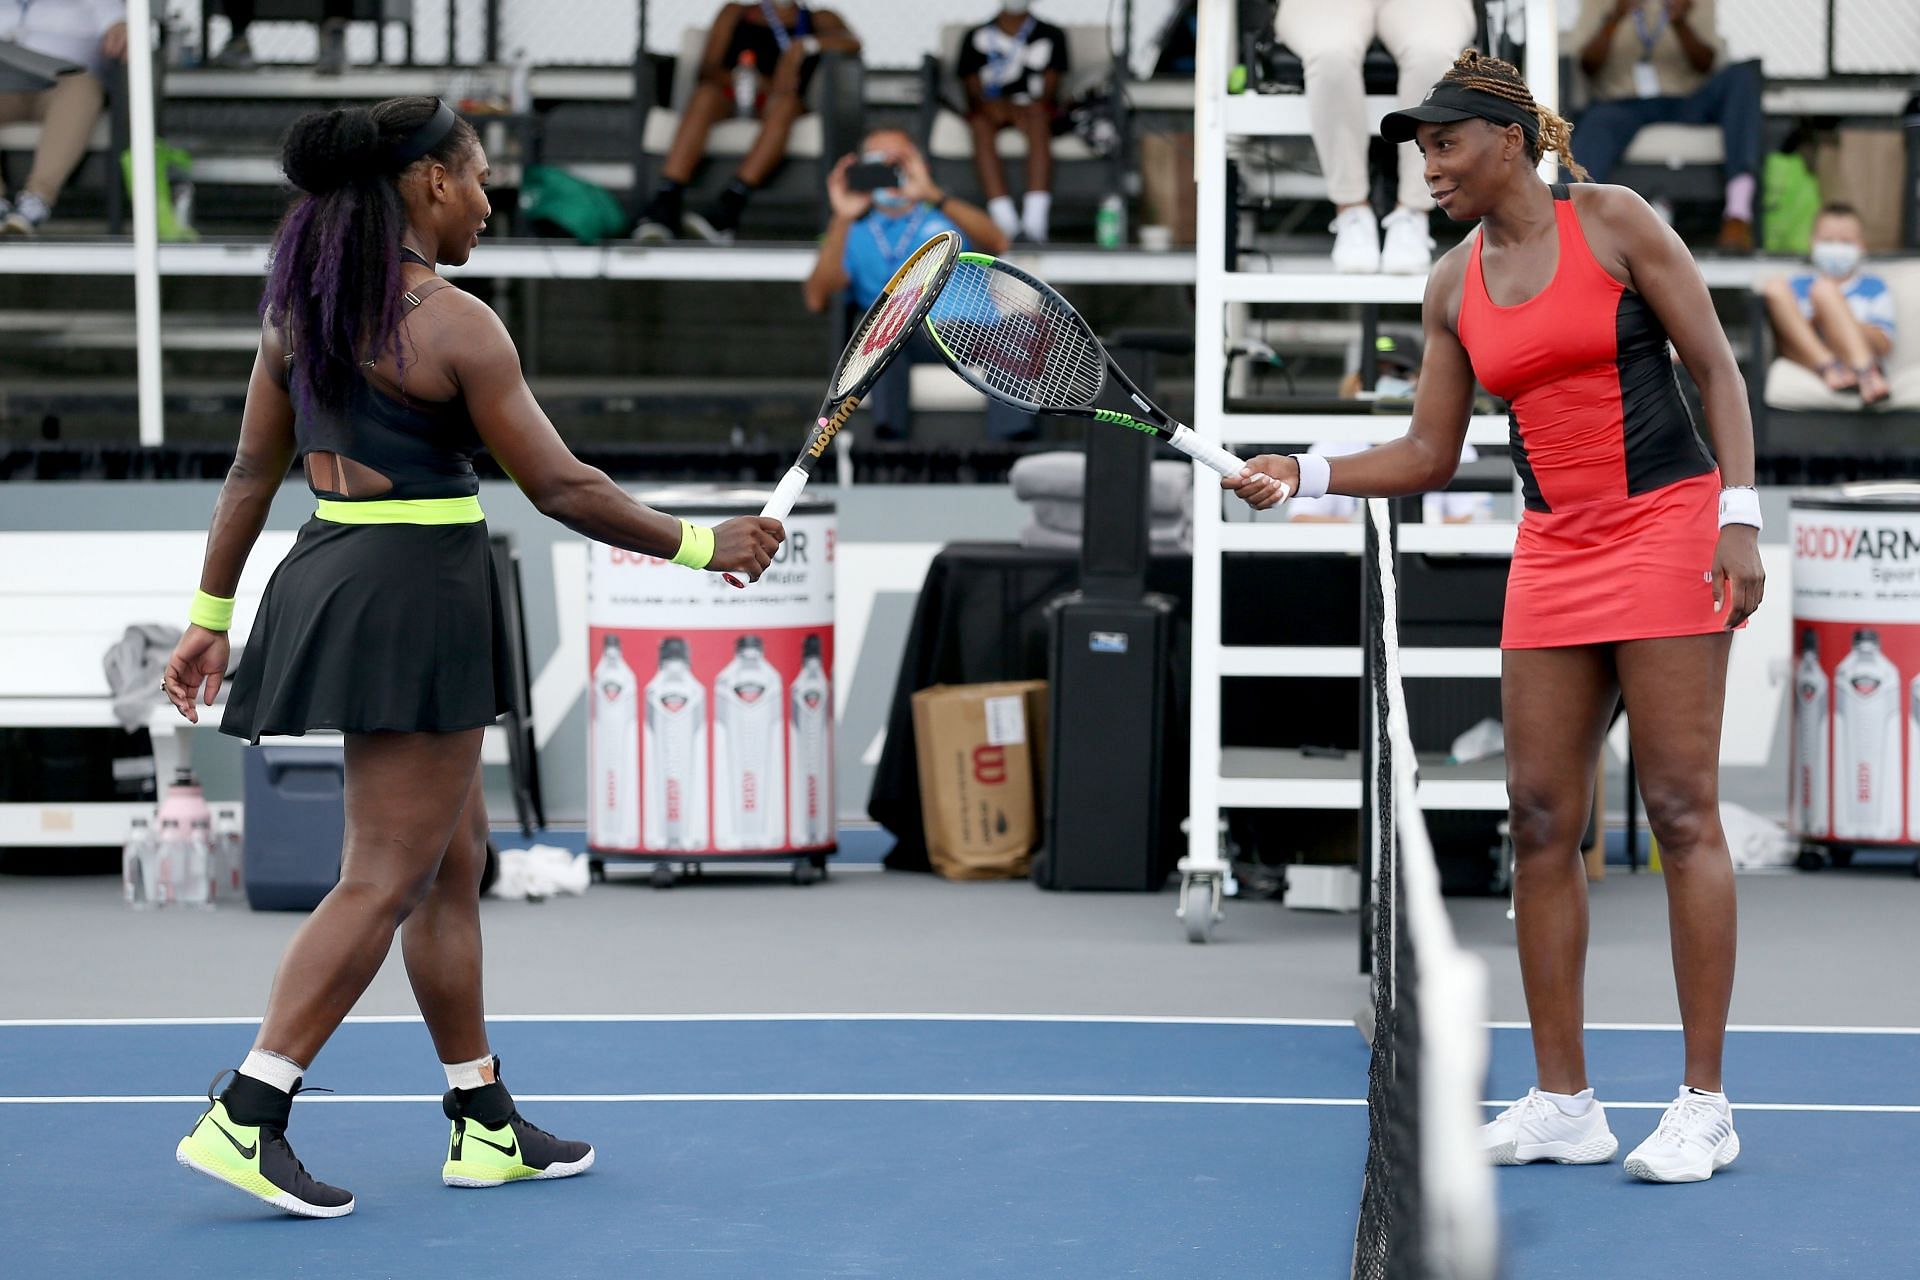 Venus Williams said that watching Serena Williams play is nerve-wracking